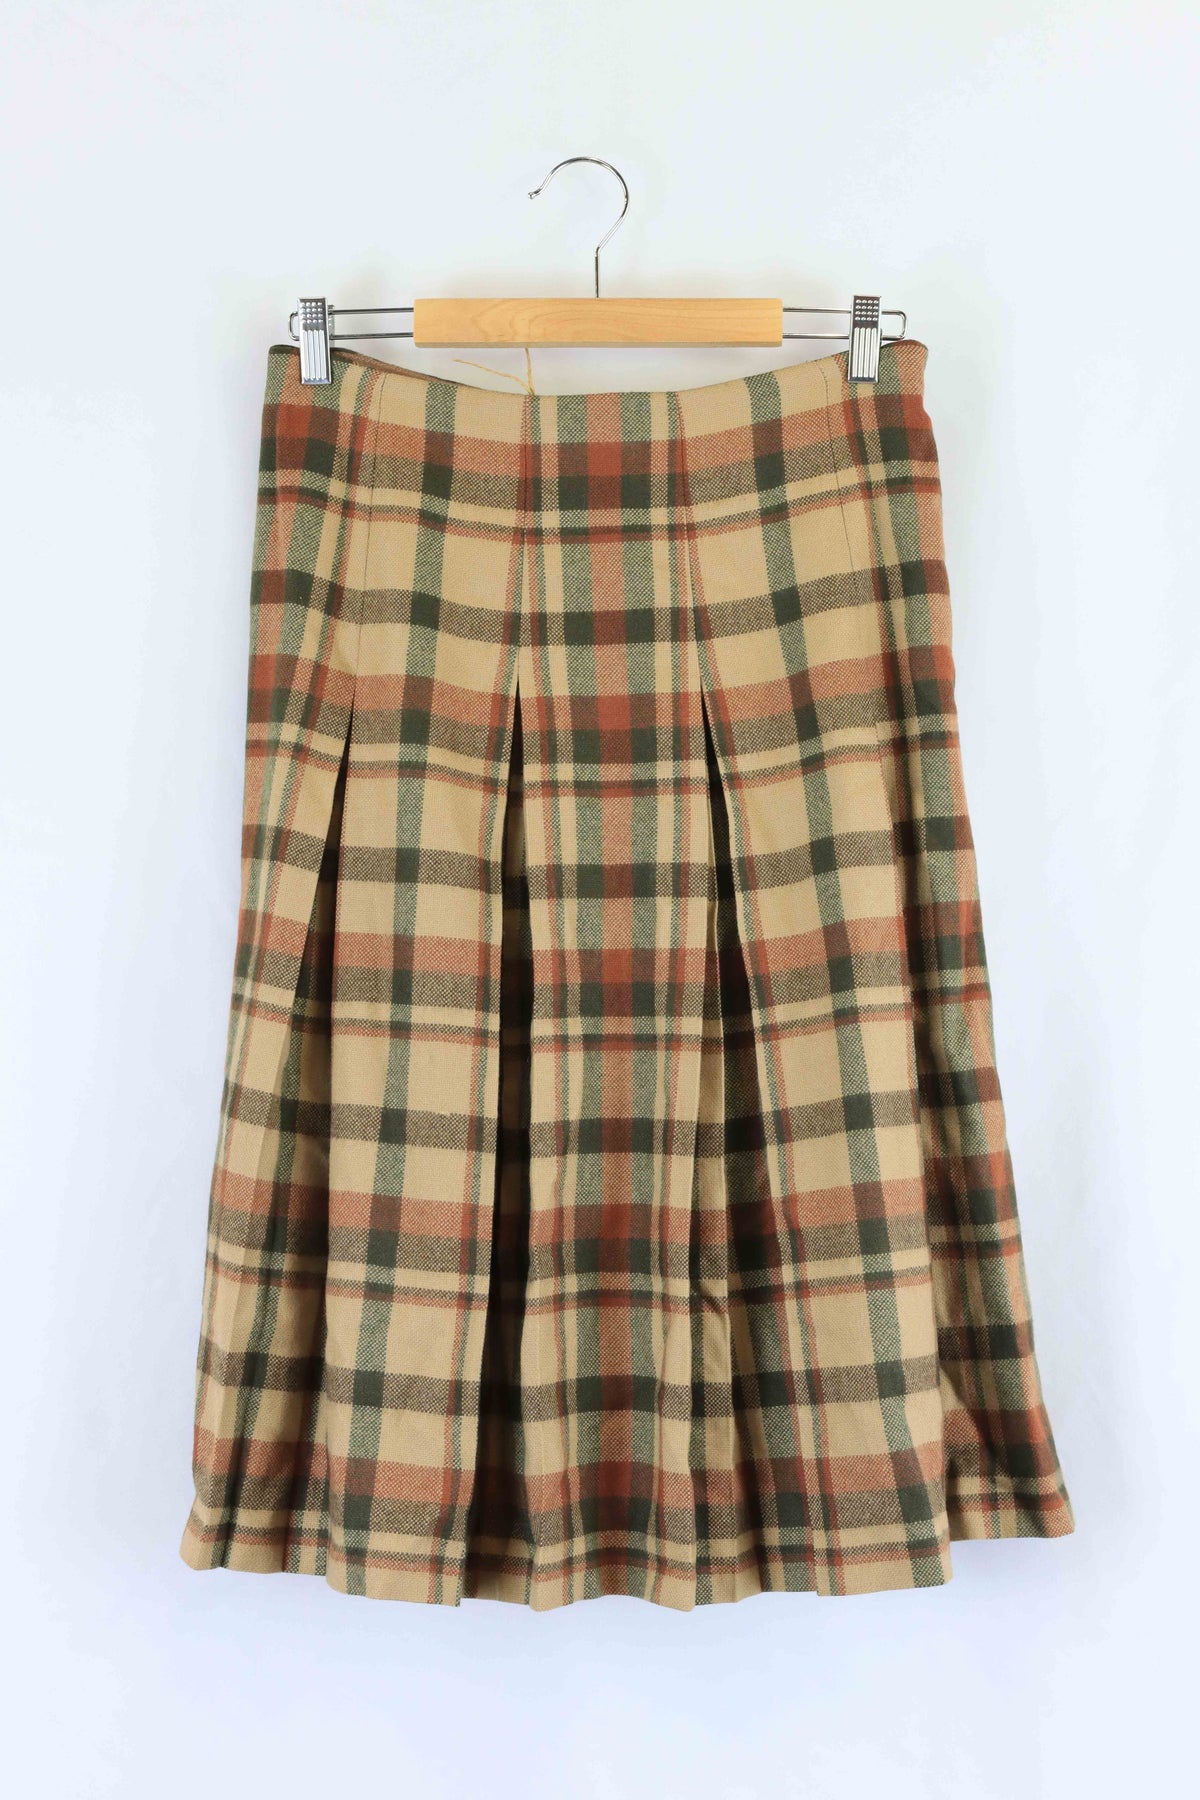 Fletcher Jones Vintage Brown Wool Check Skirt 16